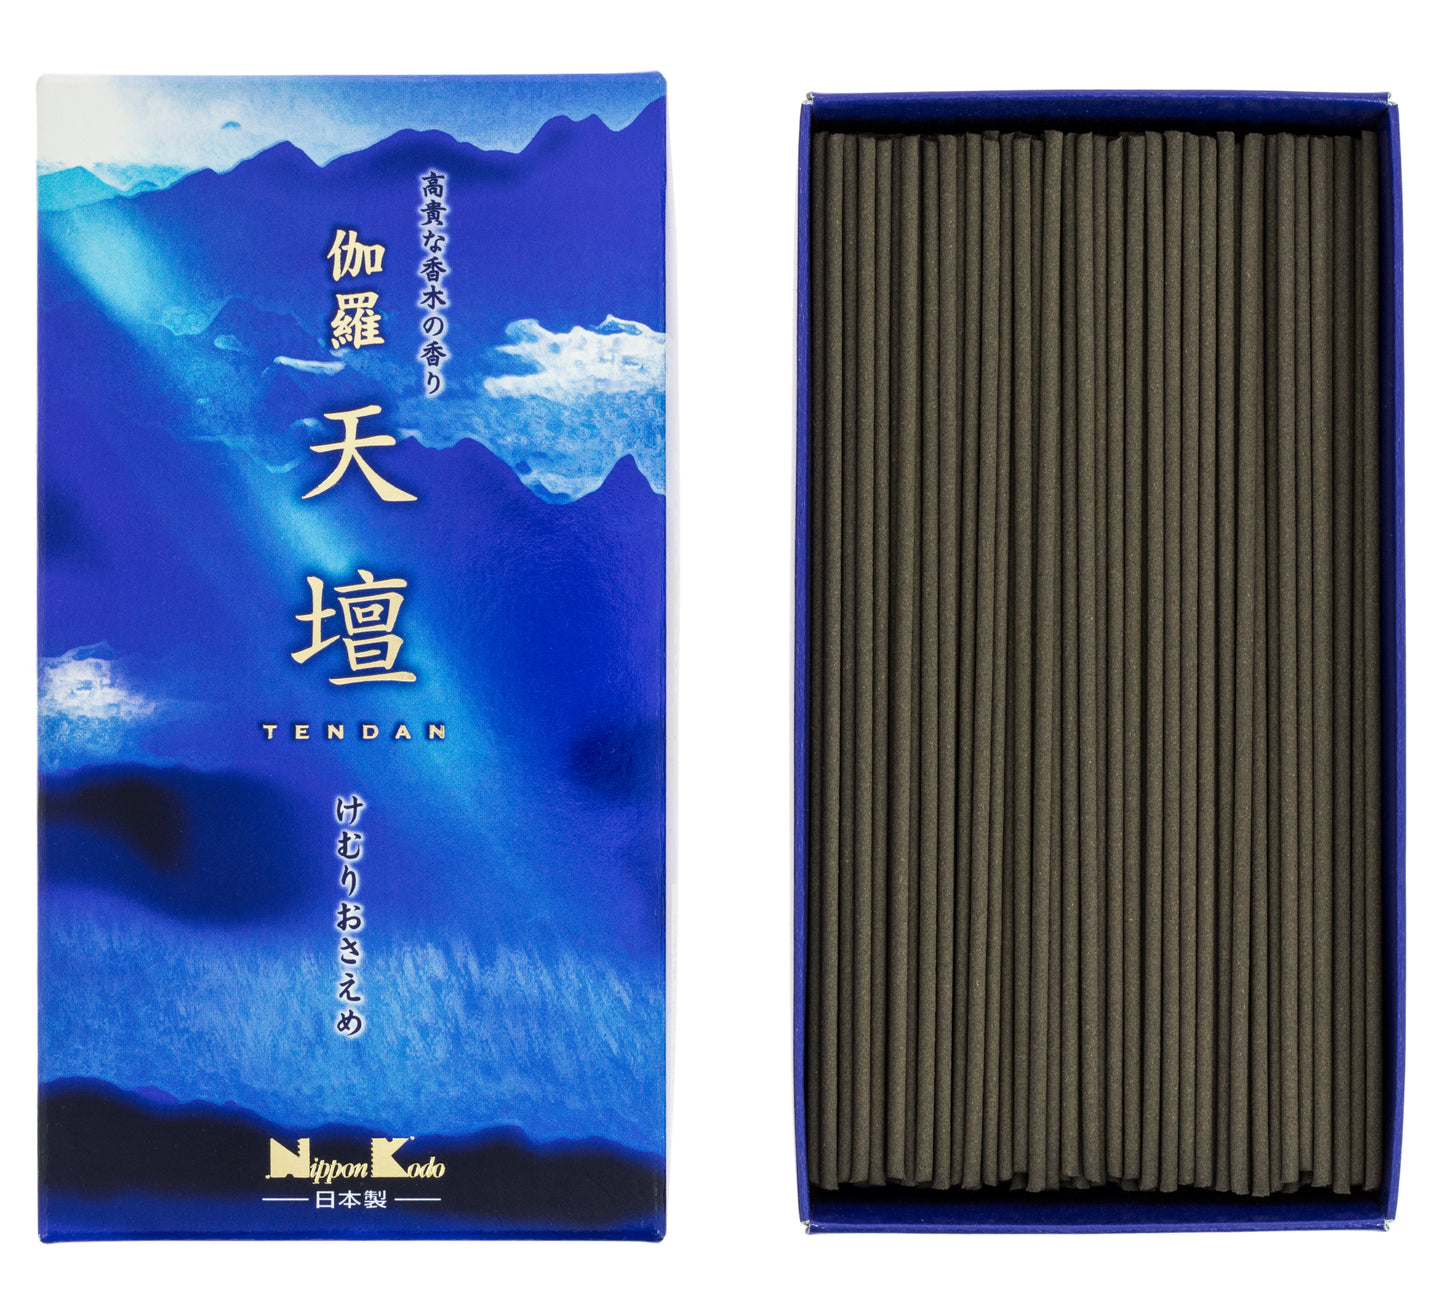 Tendan Incense - Kyara, Large Box